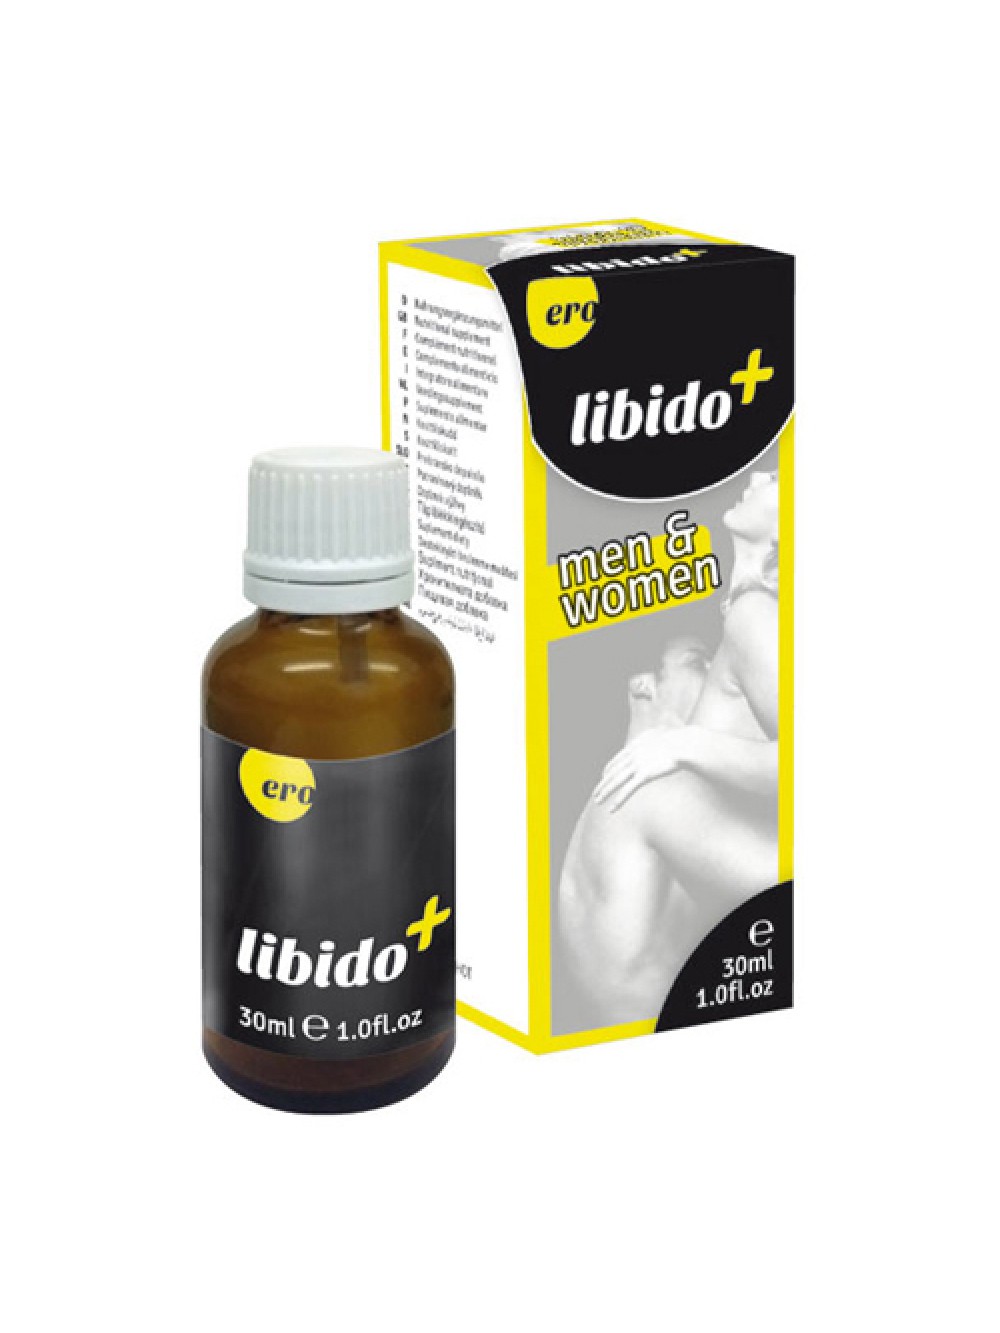 Libido + Men and Women 30 ml